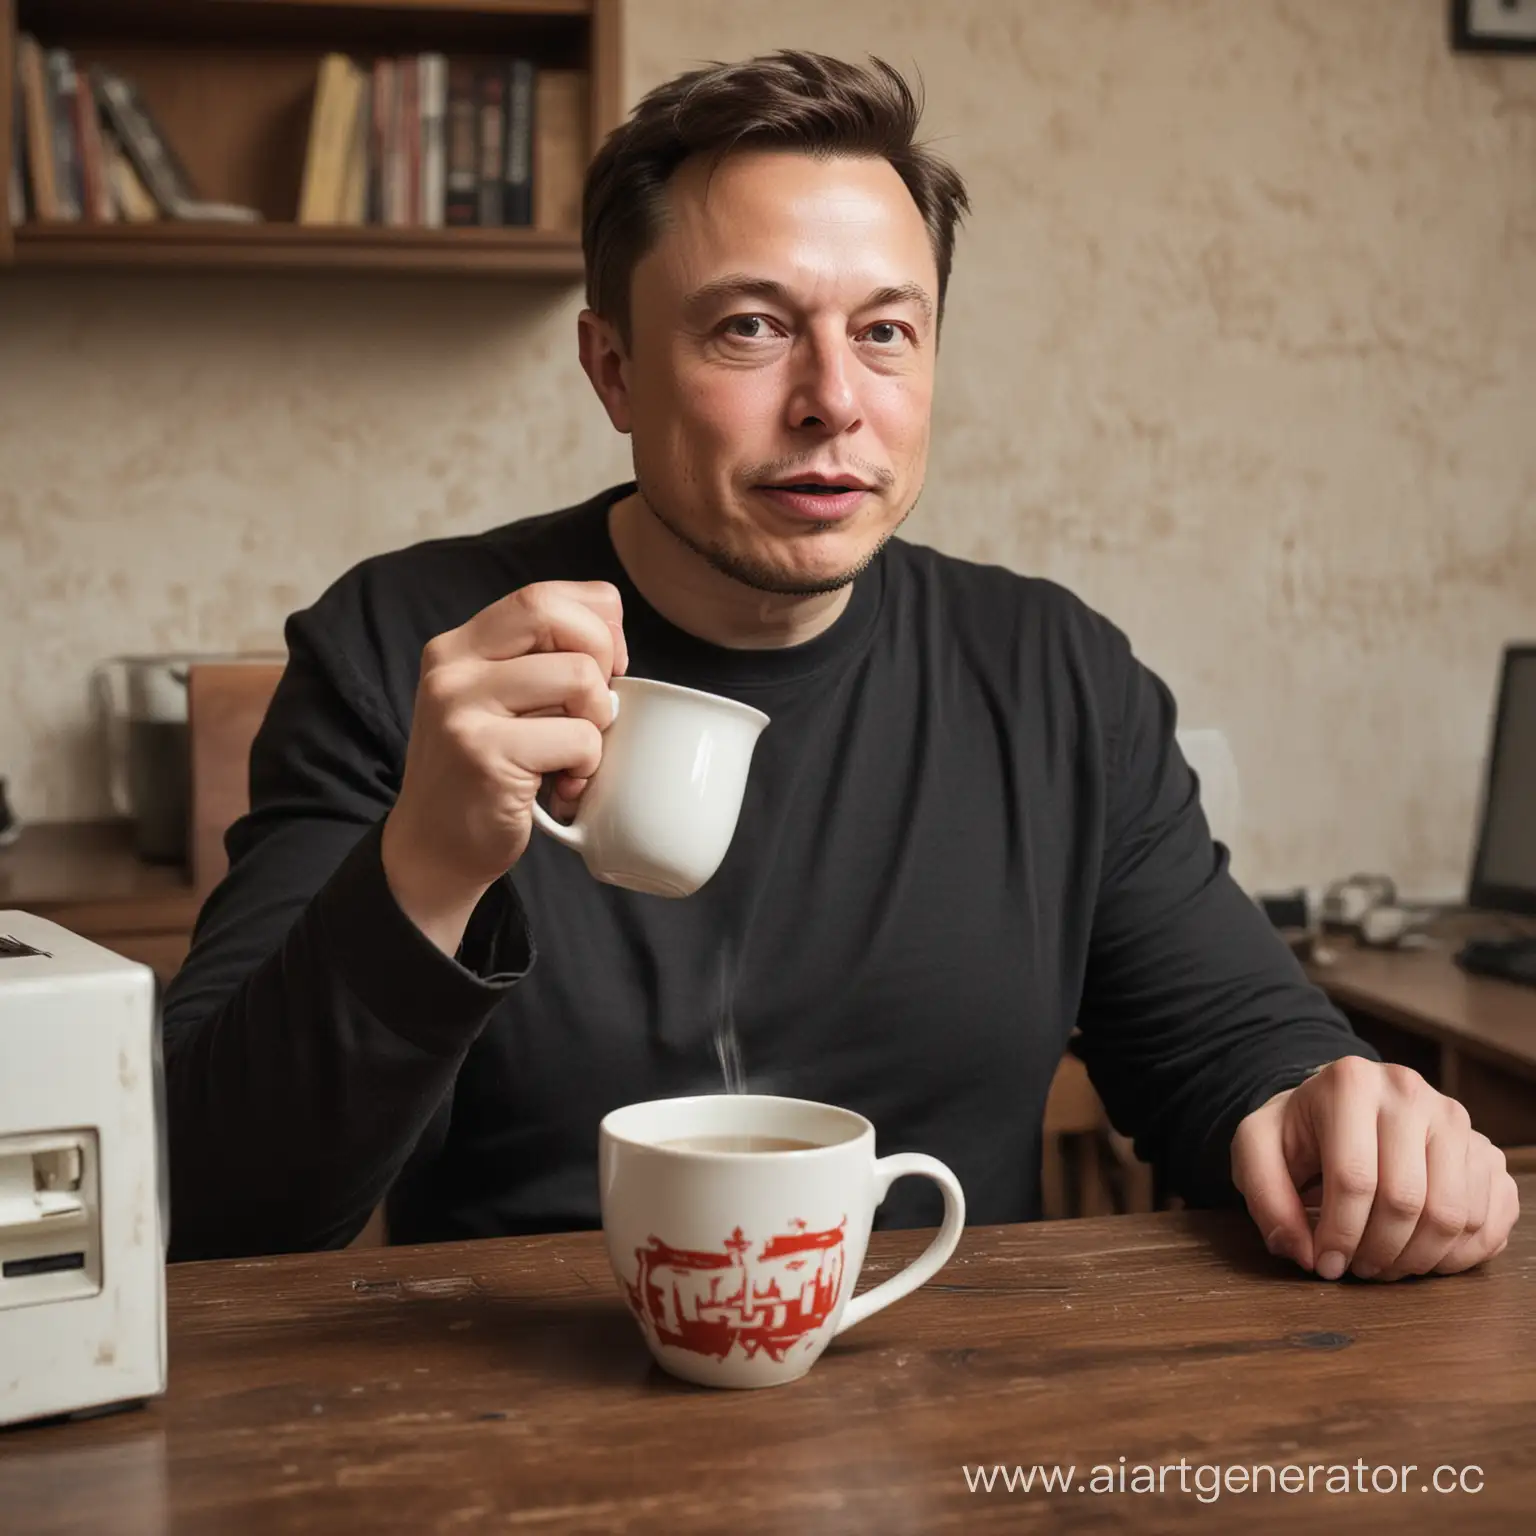 Elon-Musk-in-SovietStyle-Apartment-Enjoying-Tea-and-Computing